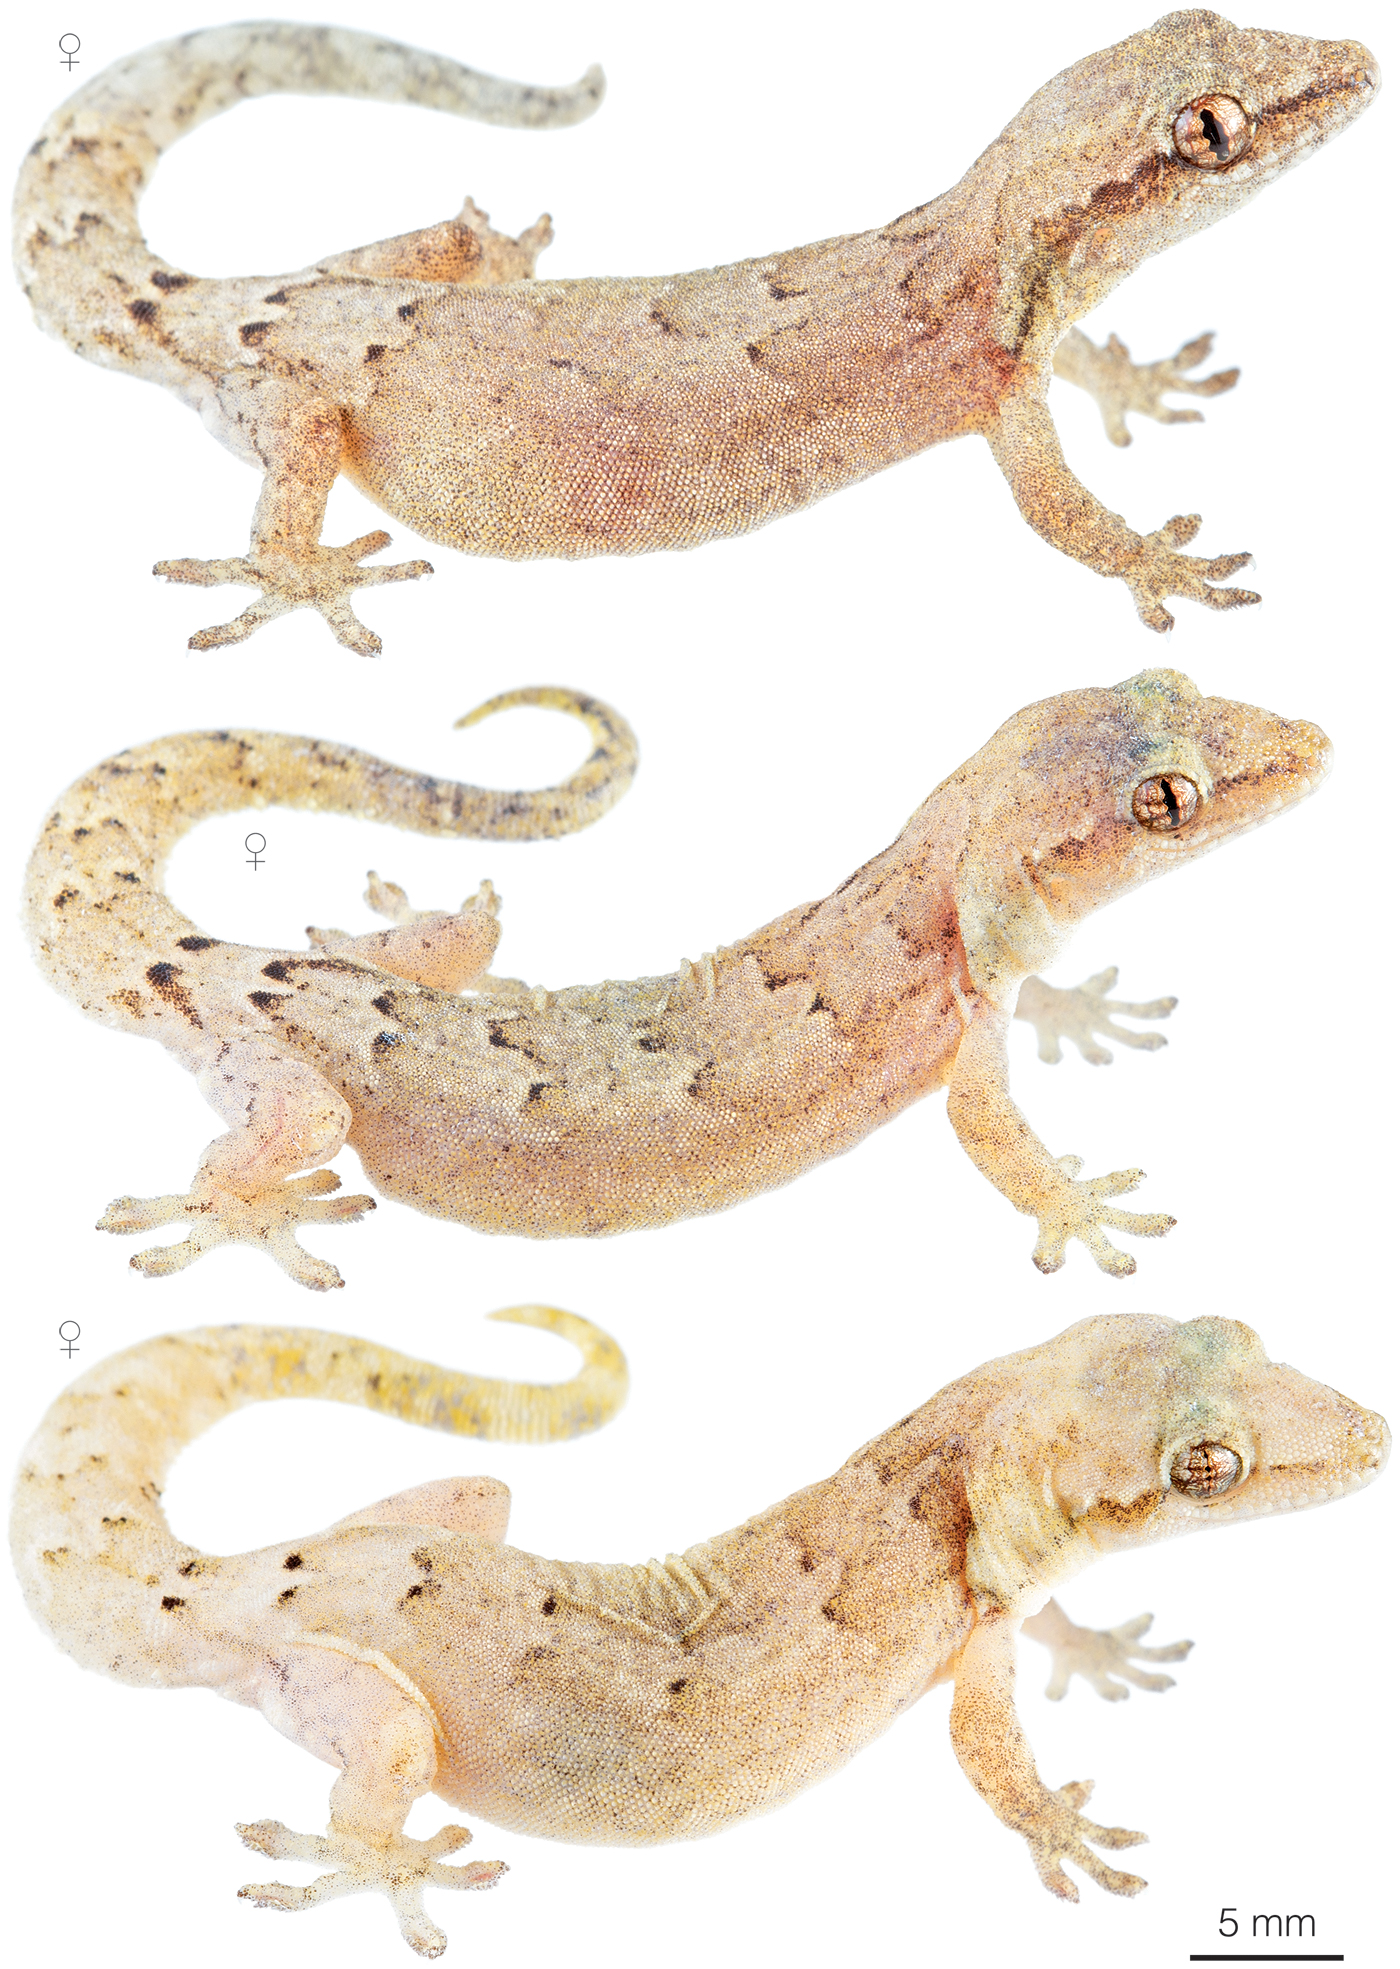 Figure showing variation among individuals of Lepidodactylus lugubris